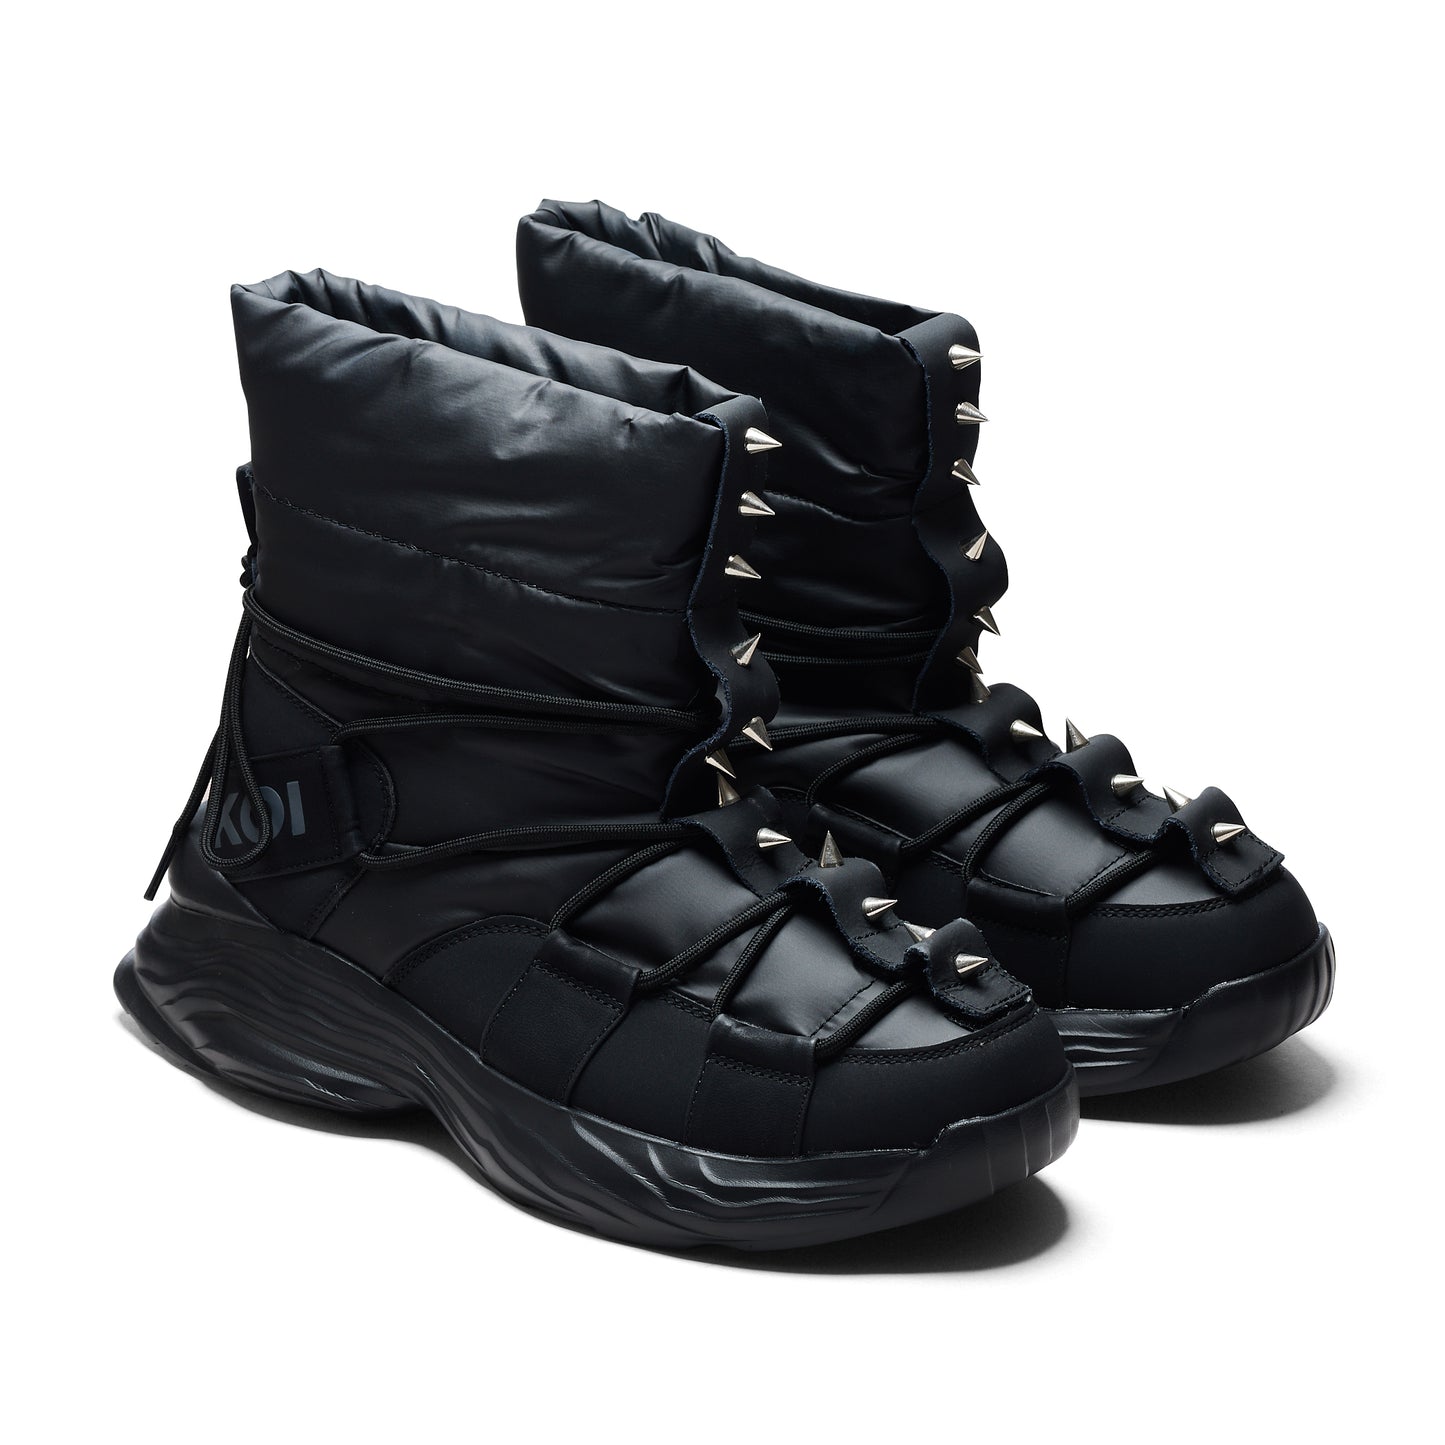 Cauldrife Demons Men's Spiked Snow Boots - Black - Ankle Boots - KOI Footwear - Black - Three-Quarter View